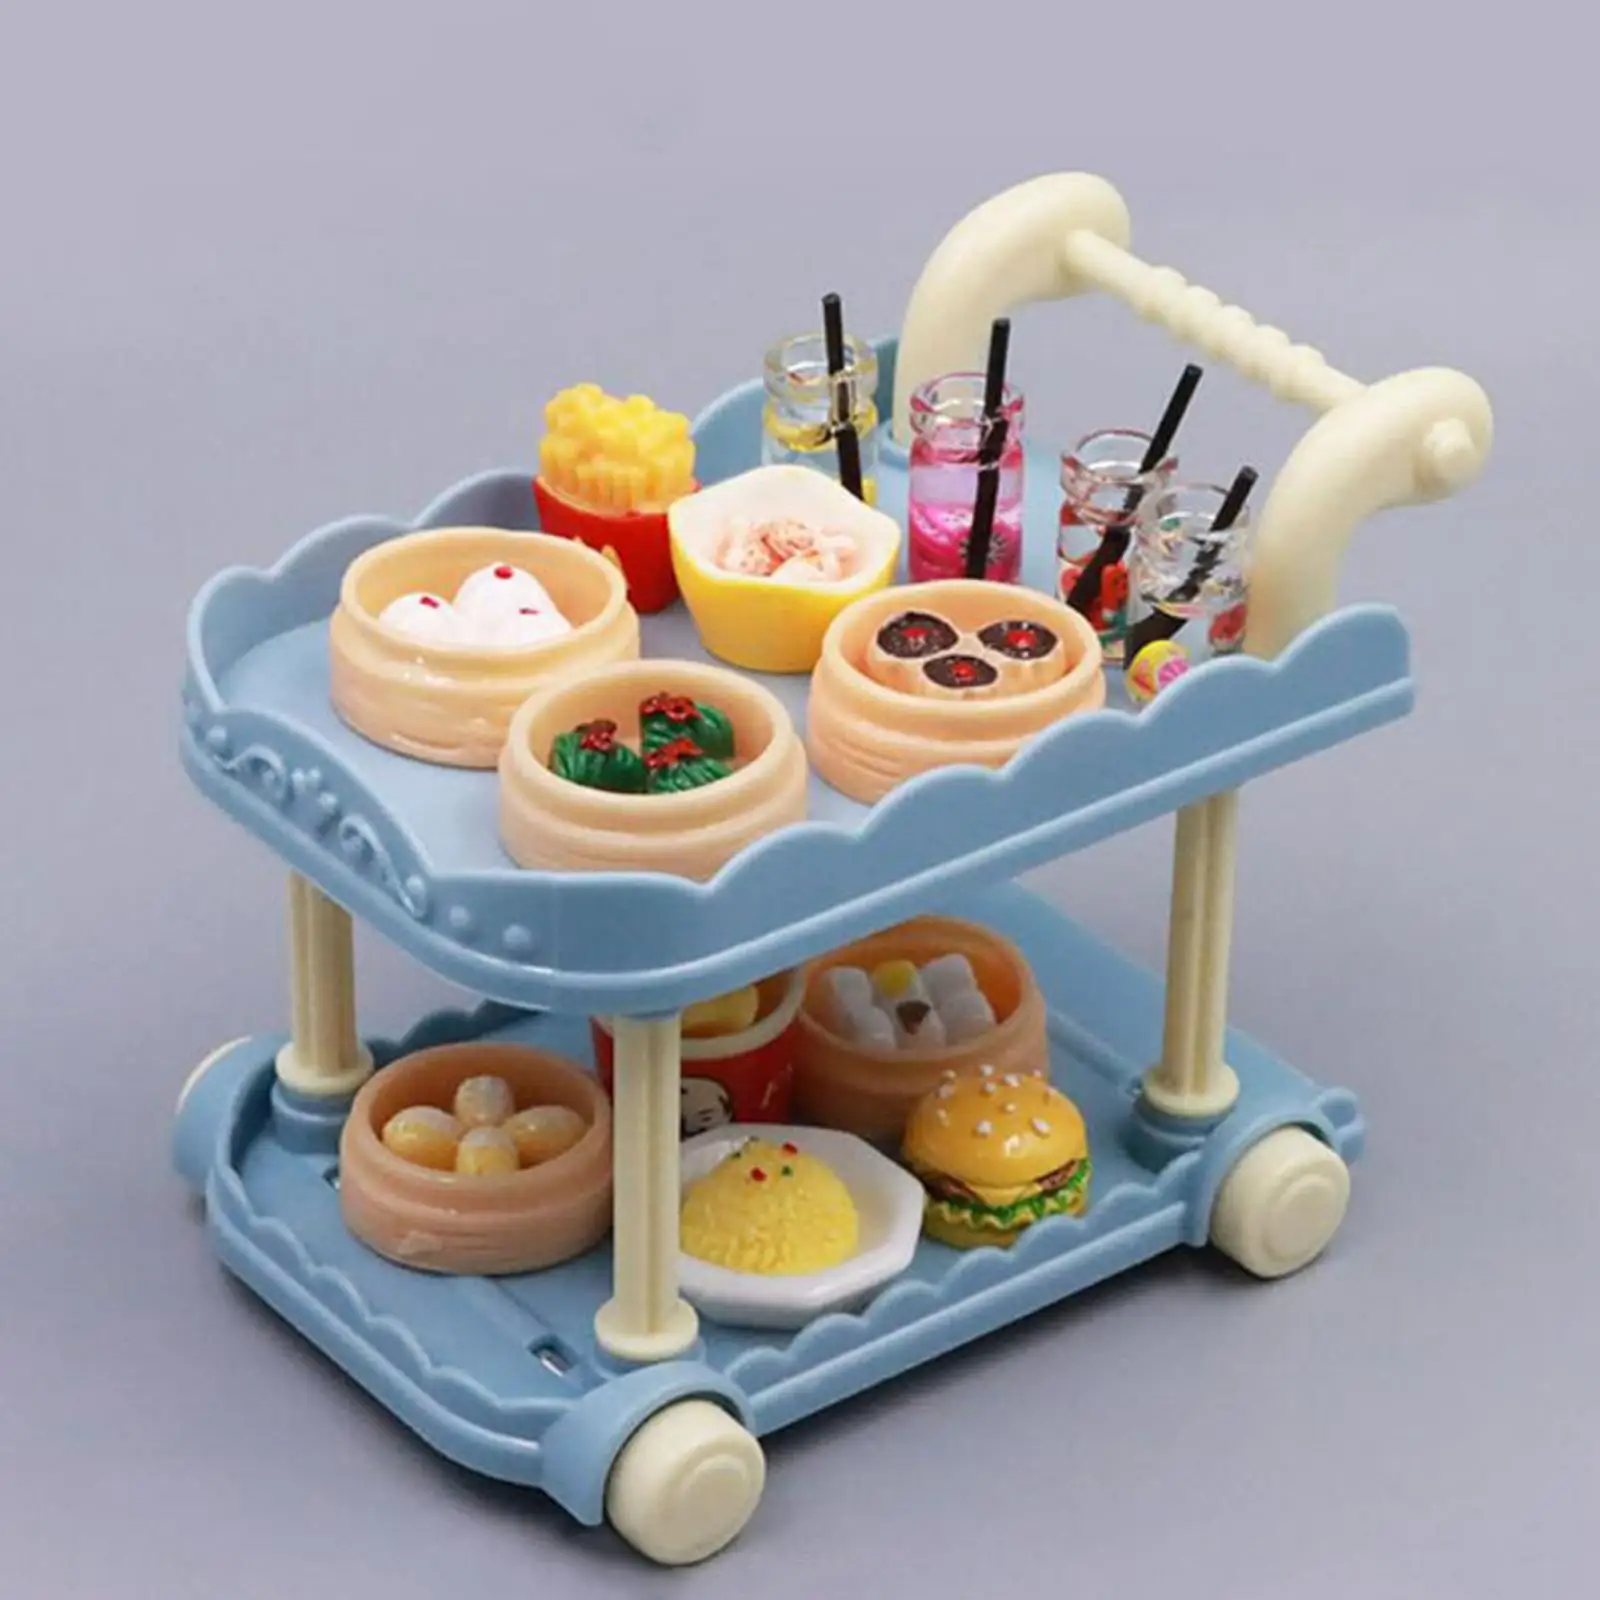 1/12 Scale Dollhouse Dinner Cart DIY Doll House Mini Doll Food Pretend Kitchen Decoration Play Toys Doll Food Model